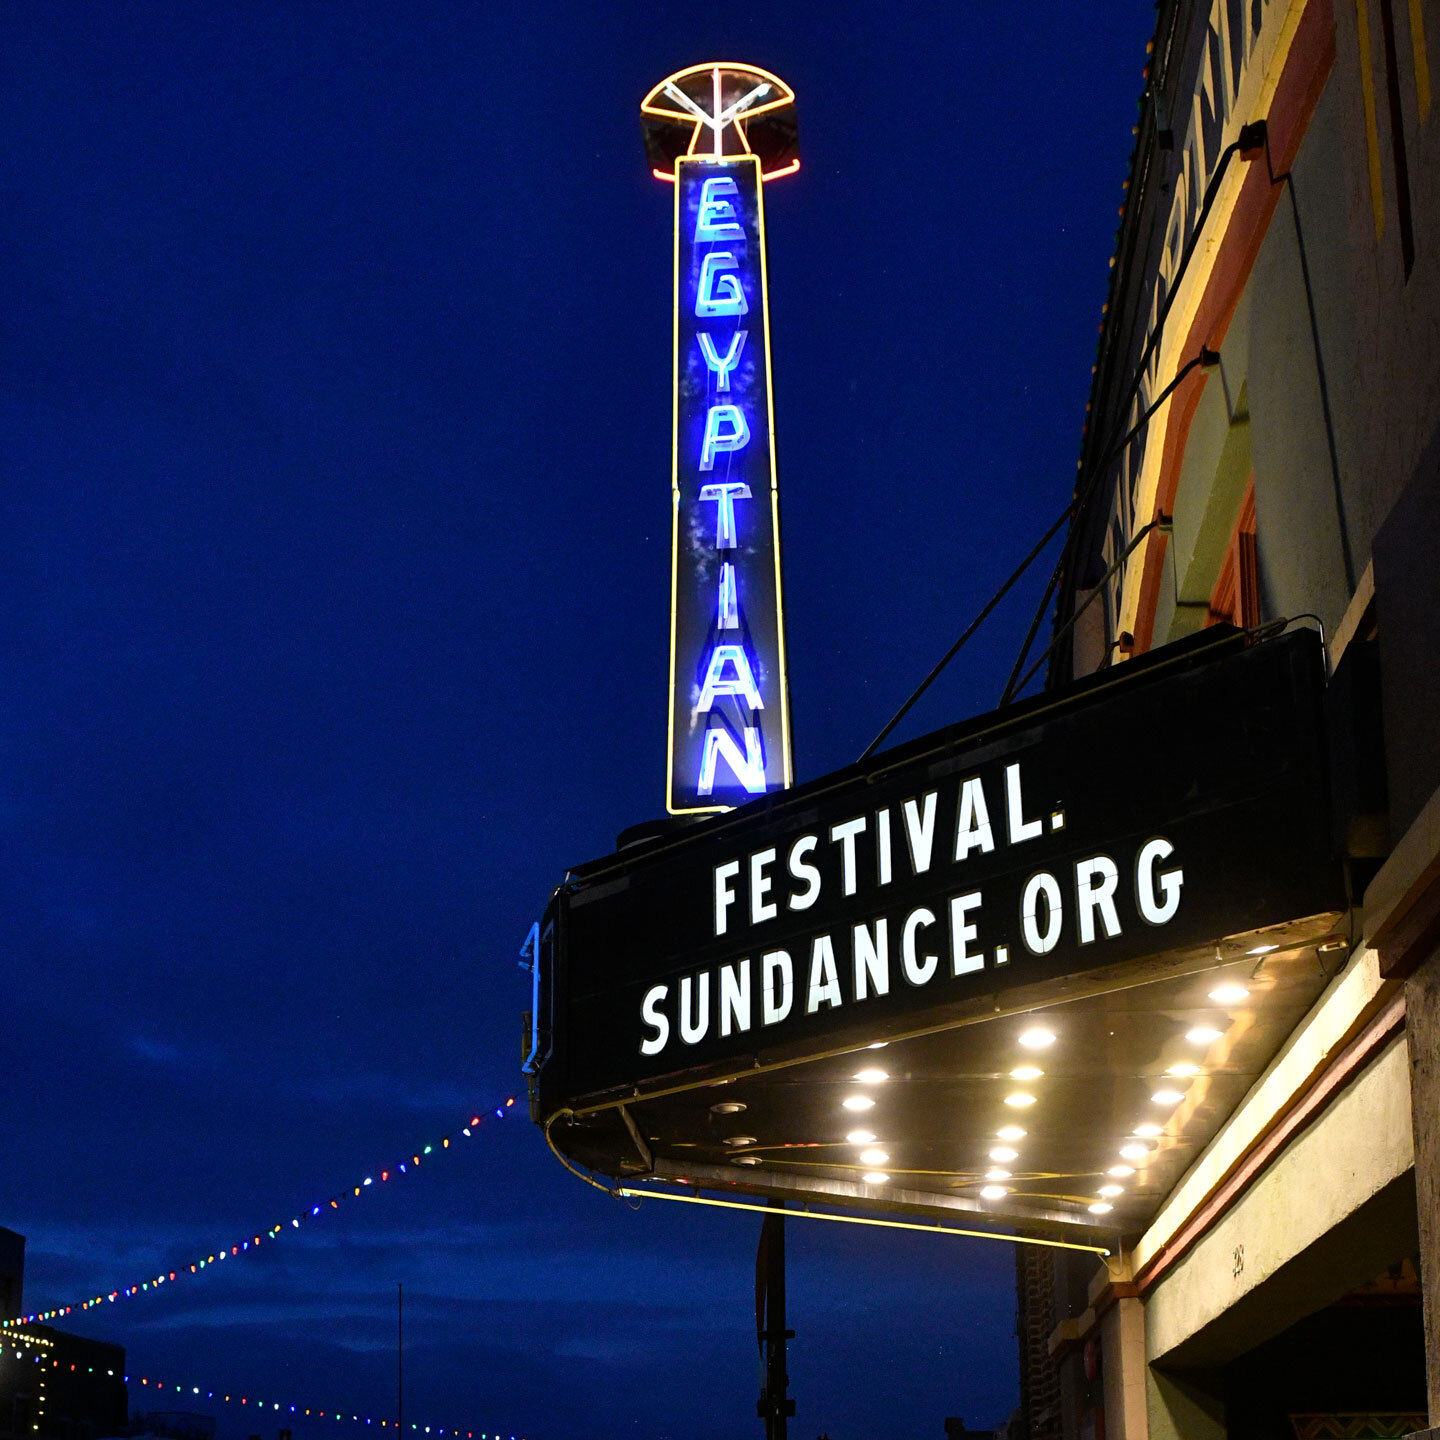 Egyptian Theatre at Sundance Film Festival with Festival.Sundance.Org on Marquee